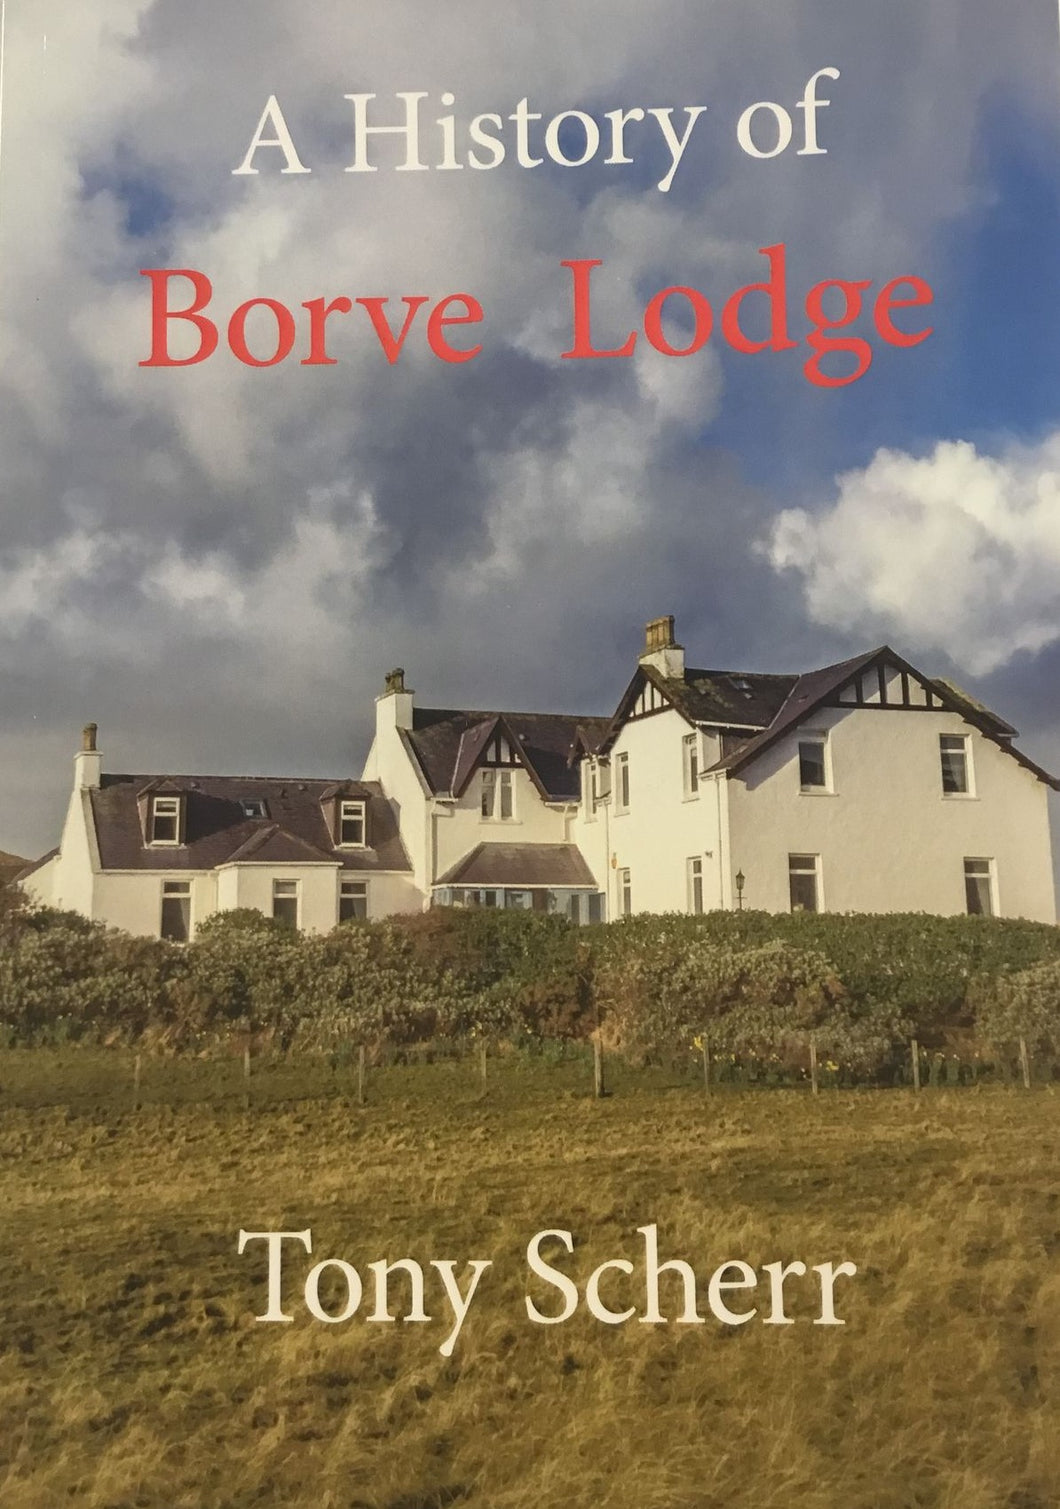 A History of Borve Lodge